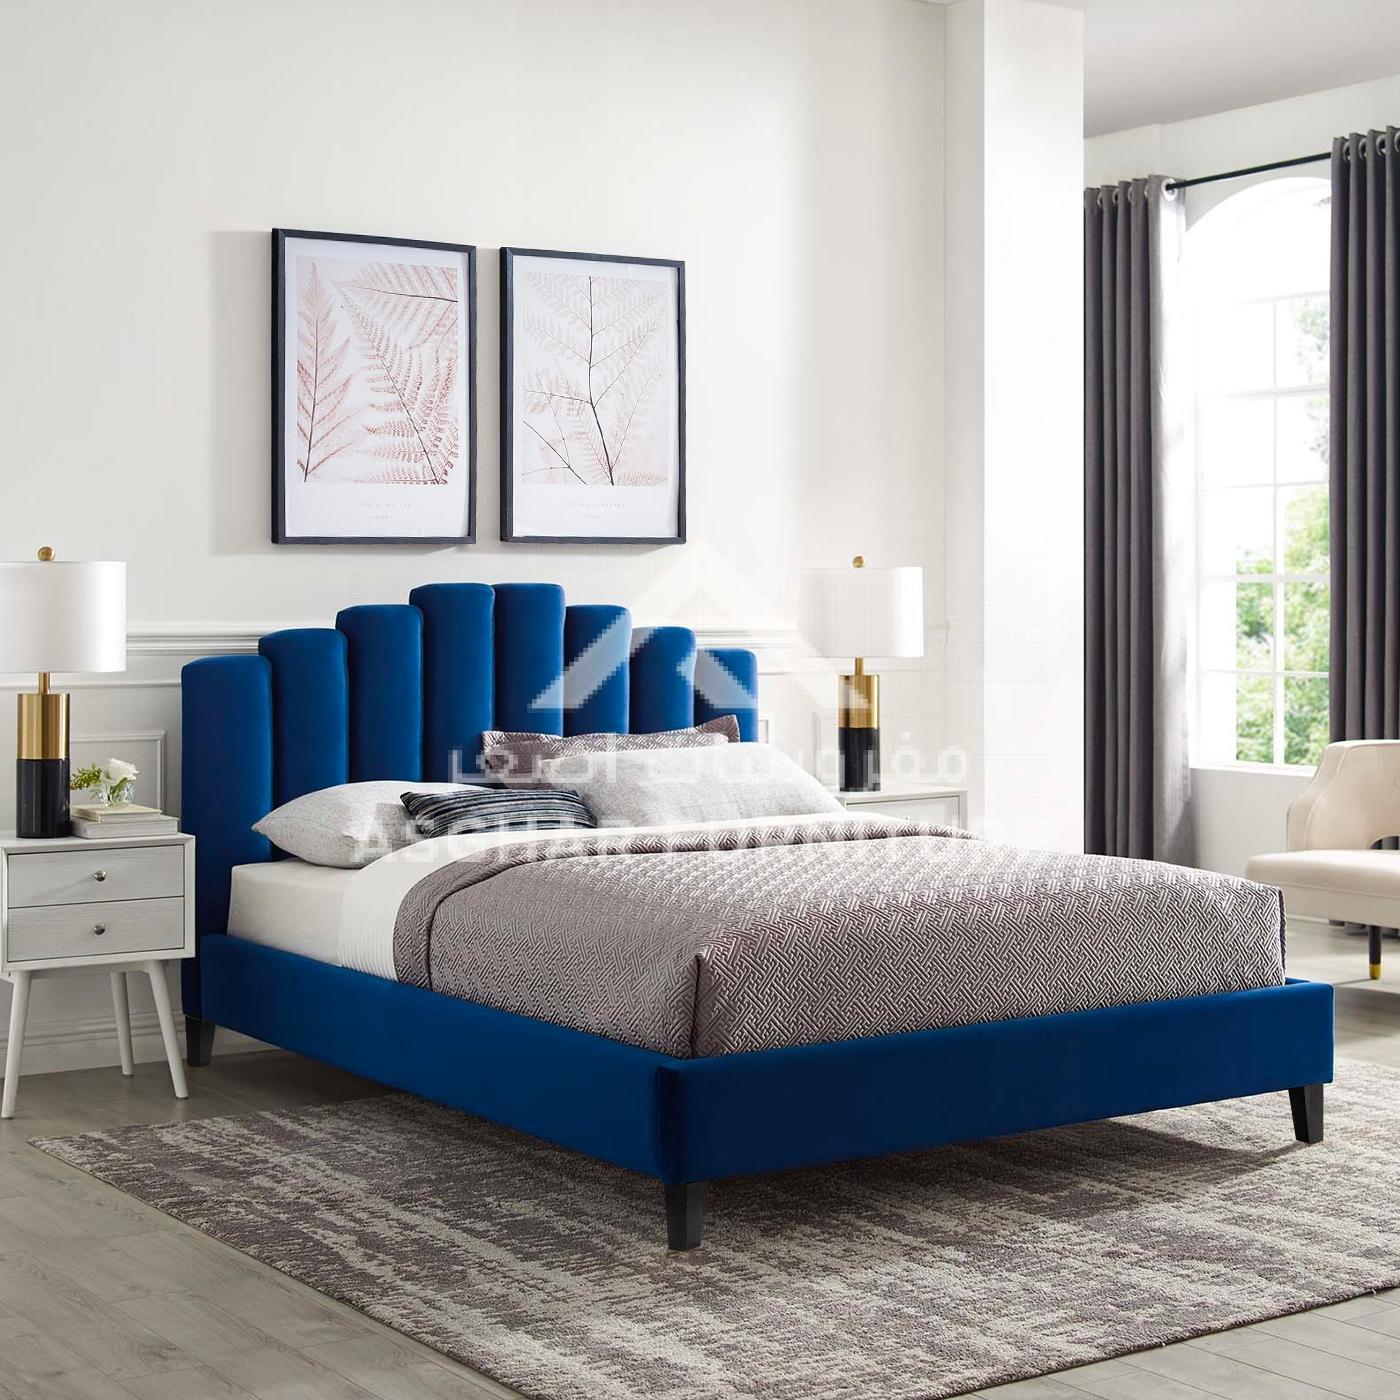 Channel Upholstered Bed - Asghar Furniture: Shop Online Home Furniture  Across UAE - Dubai, Abu Dhabi, Al Ain, Fujairah, Ras Al Khaimah, Ajman,  Sharjah.